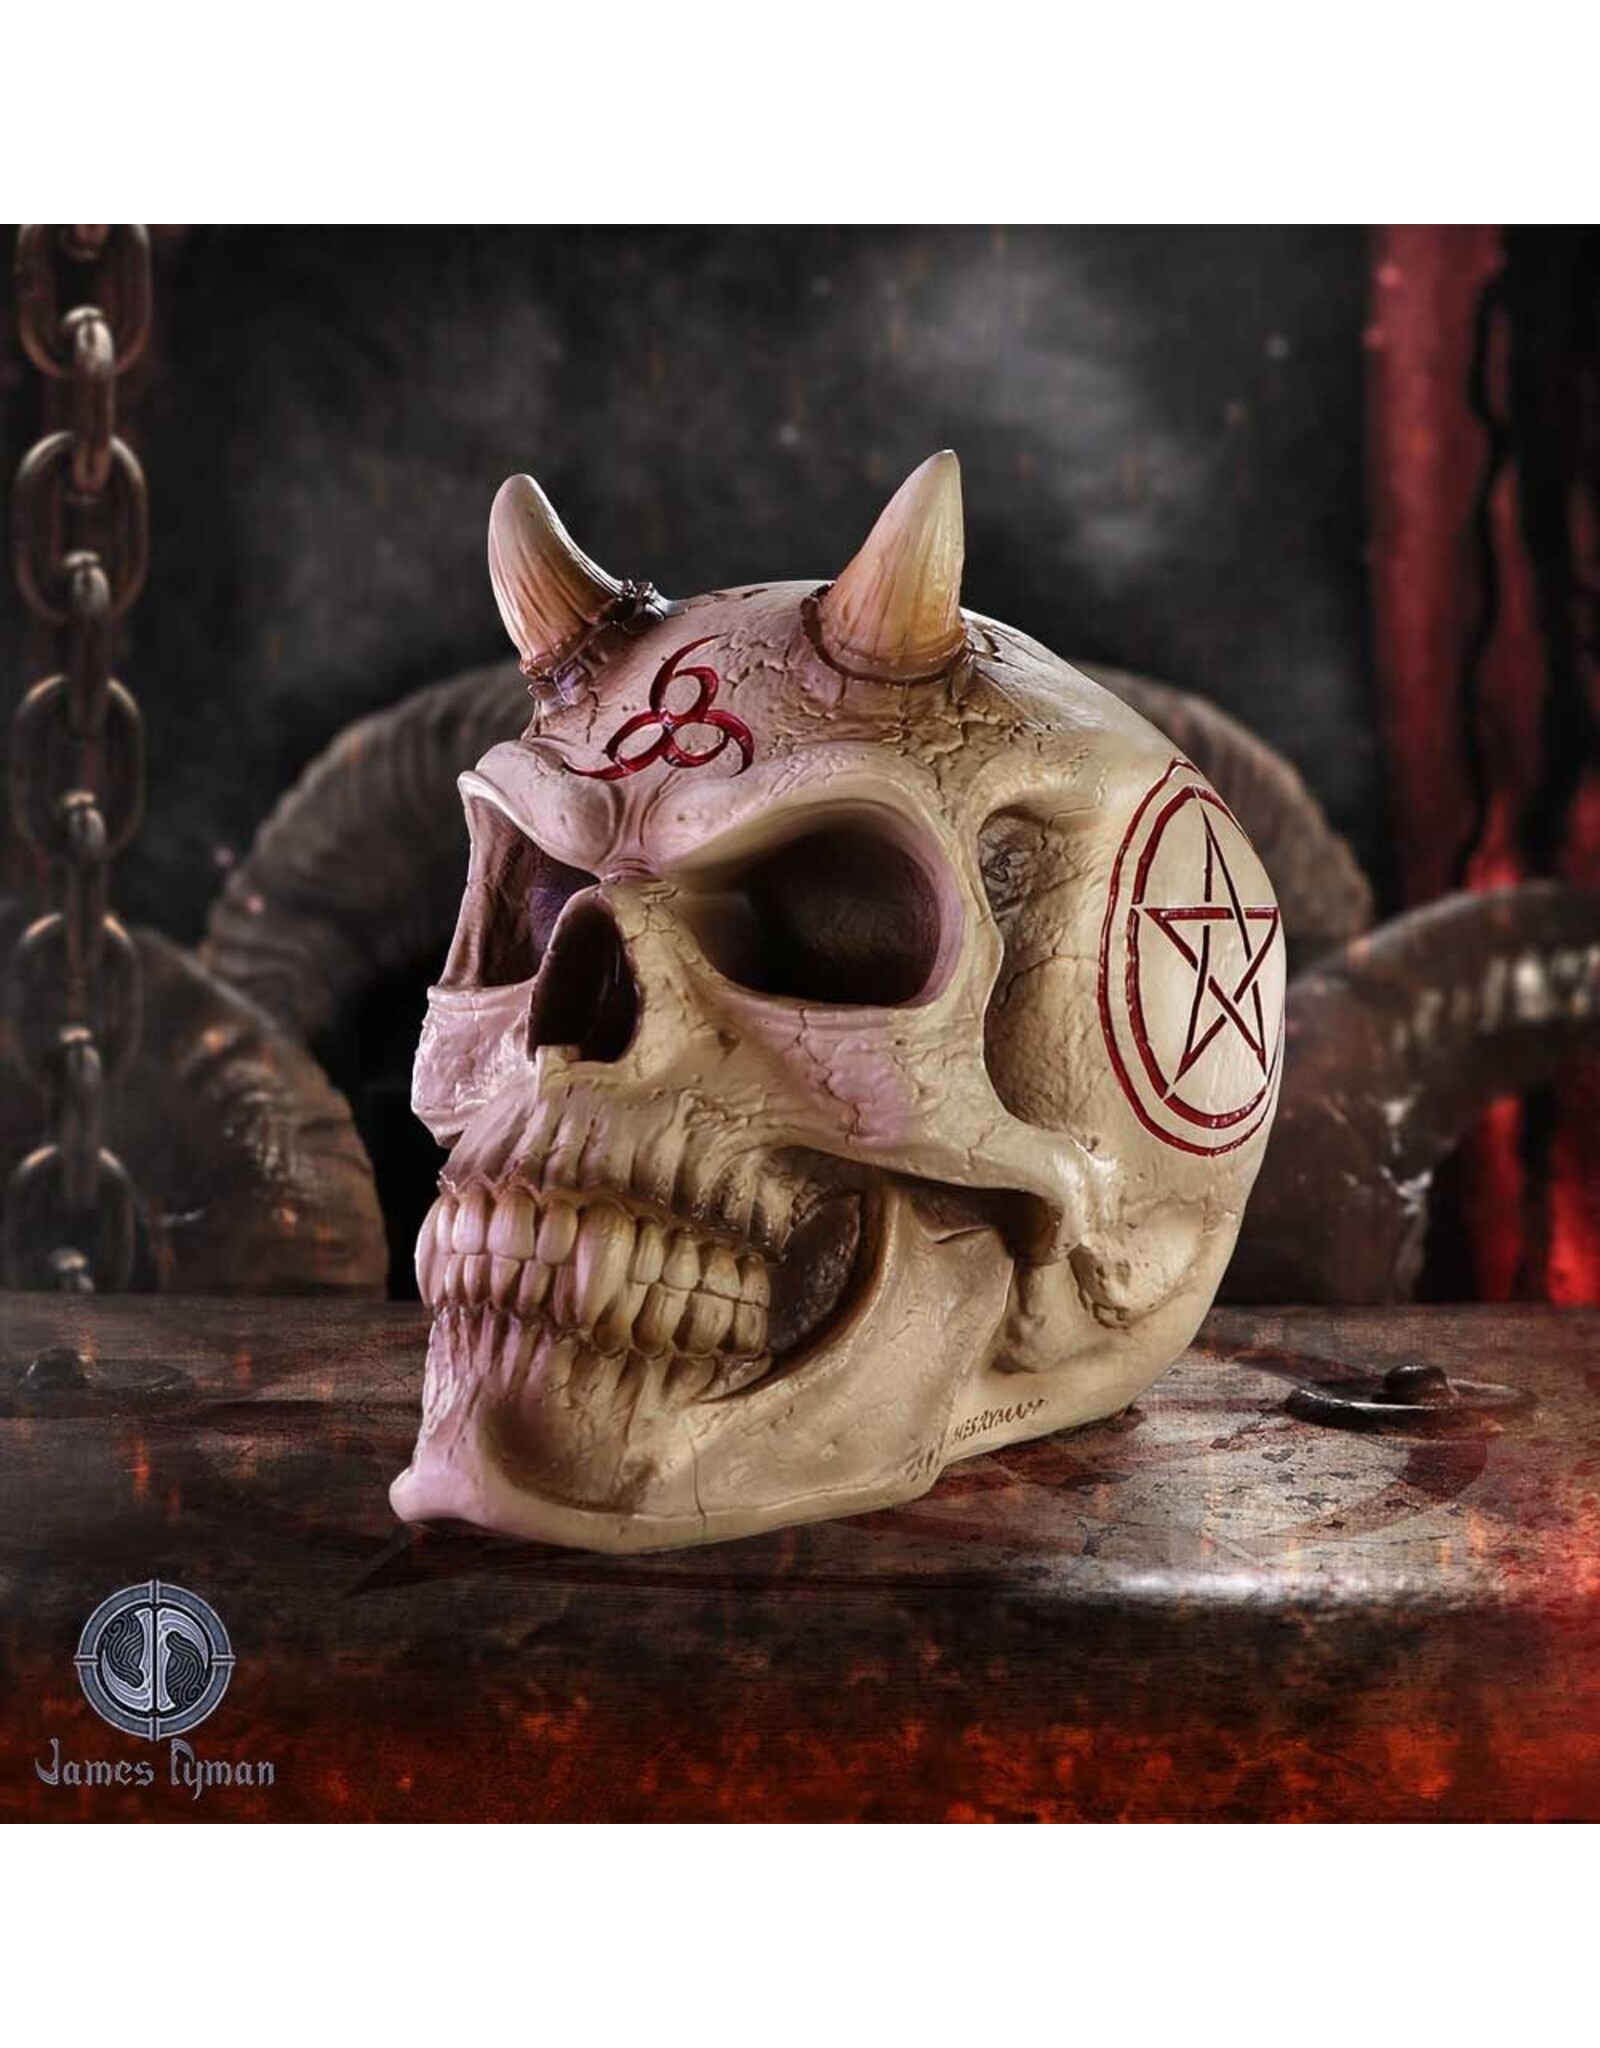 James Ryman Reapers, schedels en draken -  James Ryman 666 Schedel Nemesis Now